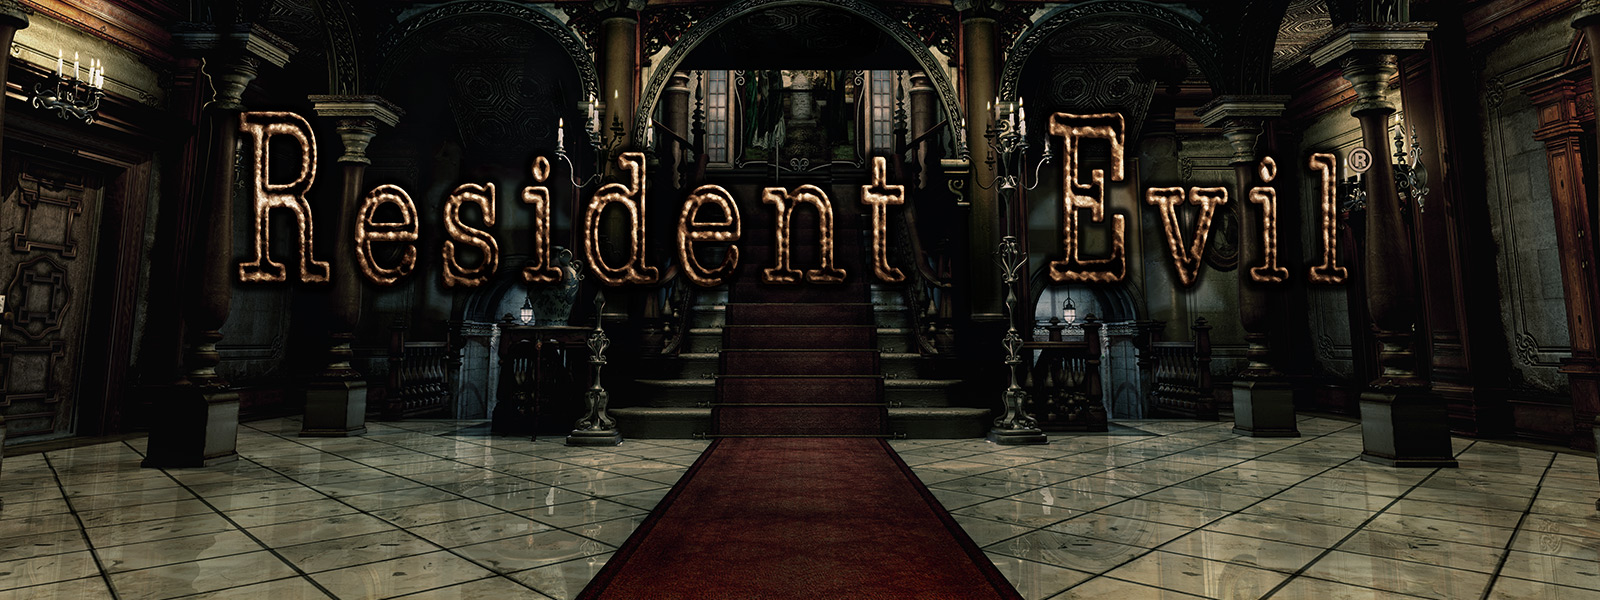 Resident Evil, σκηνή αψιδωτής εισόδου με κόκκινο χαλί στη σκάλα